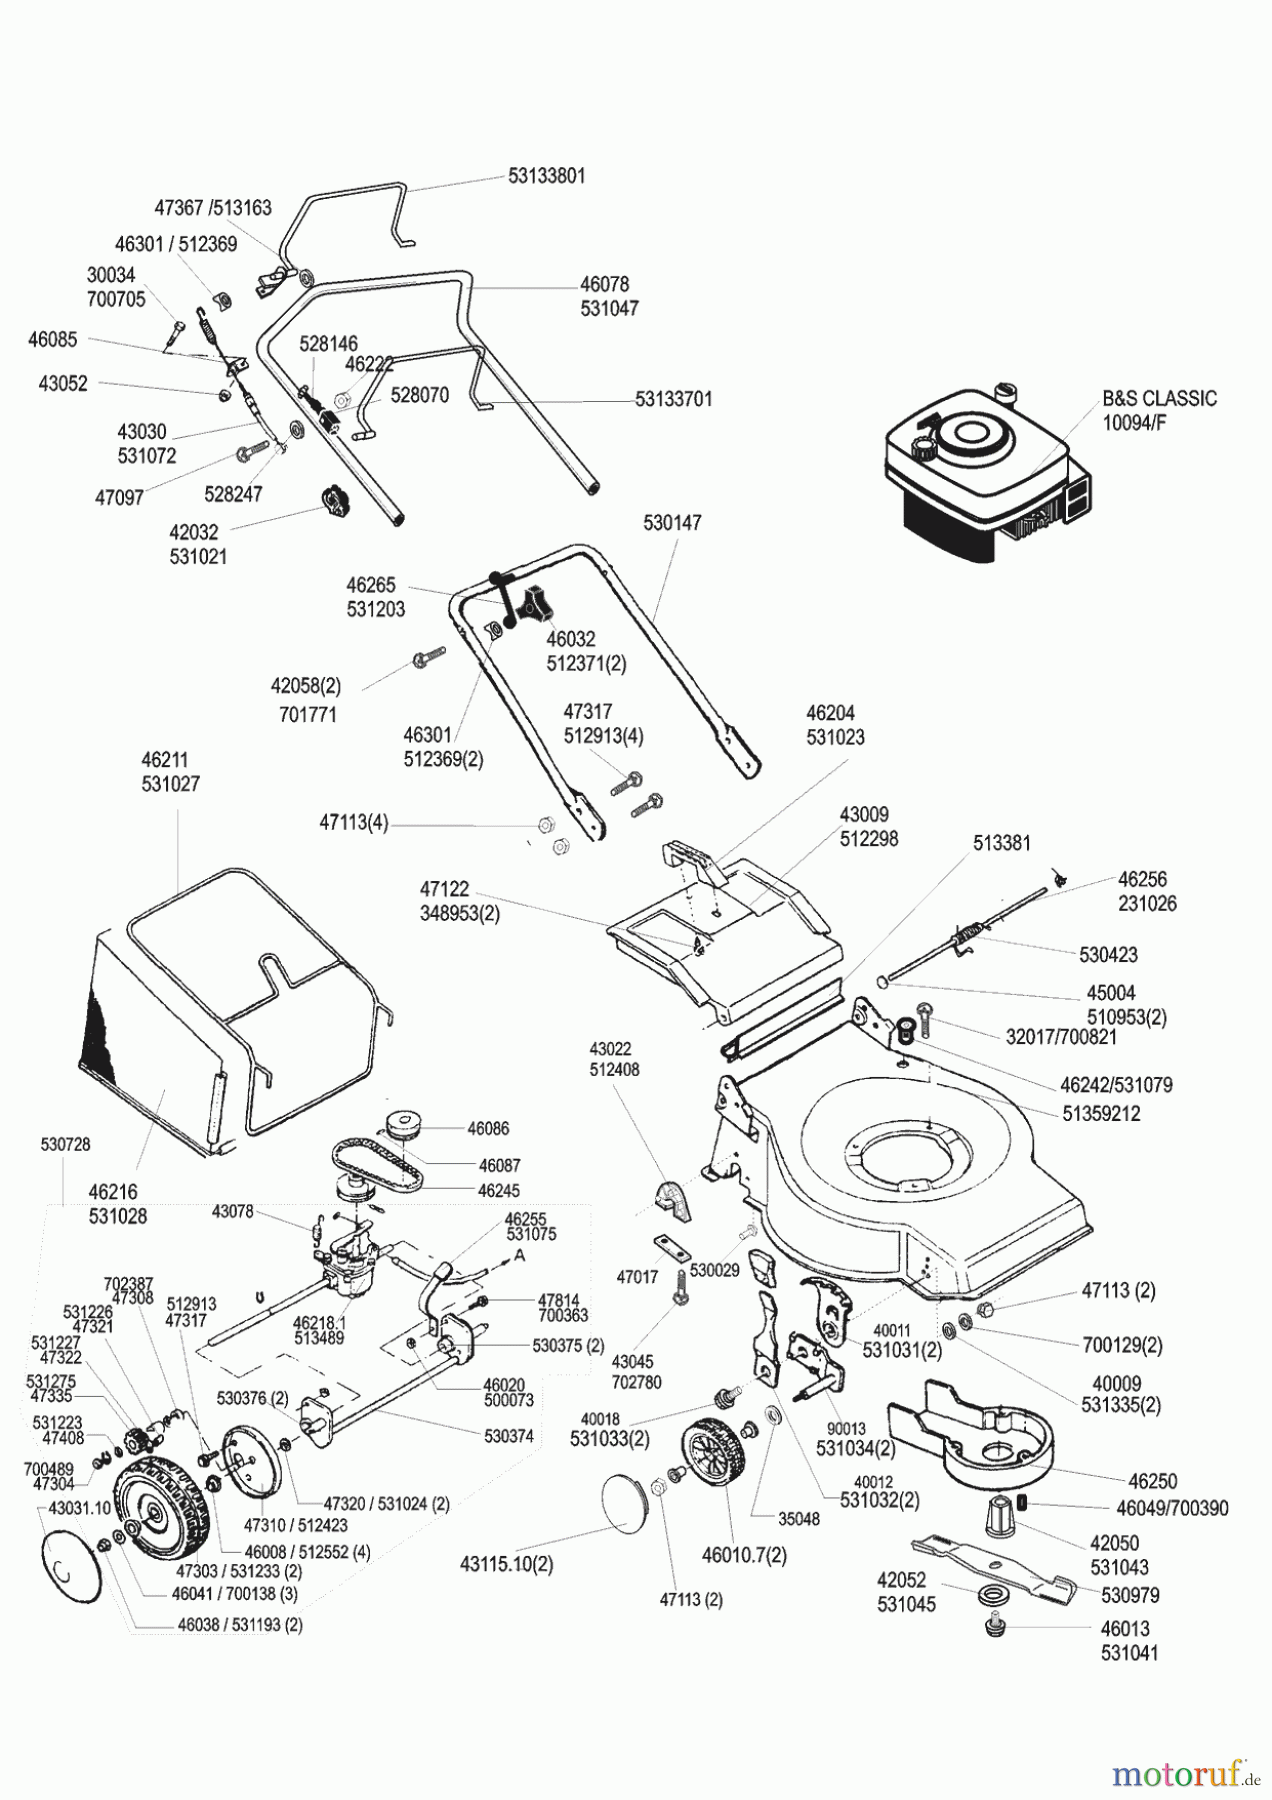  AL-KO Gartentechnik Benzinrasenmäher Lazer 464 S  11/1998 Seite 1